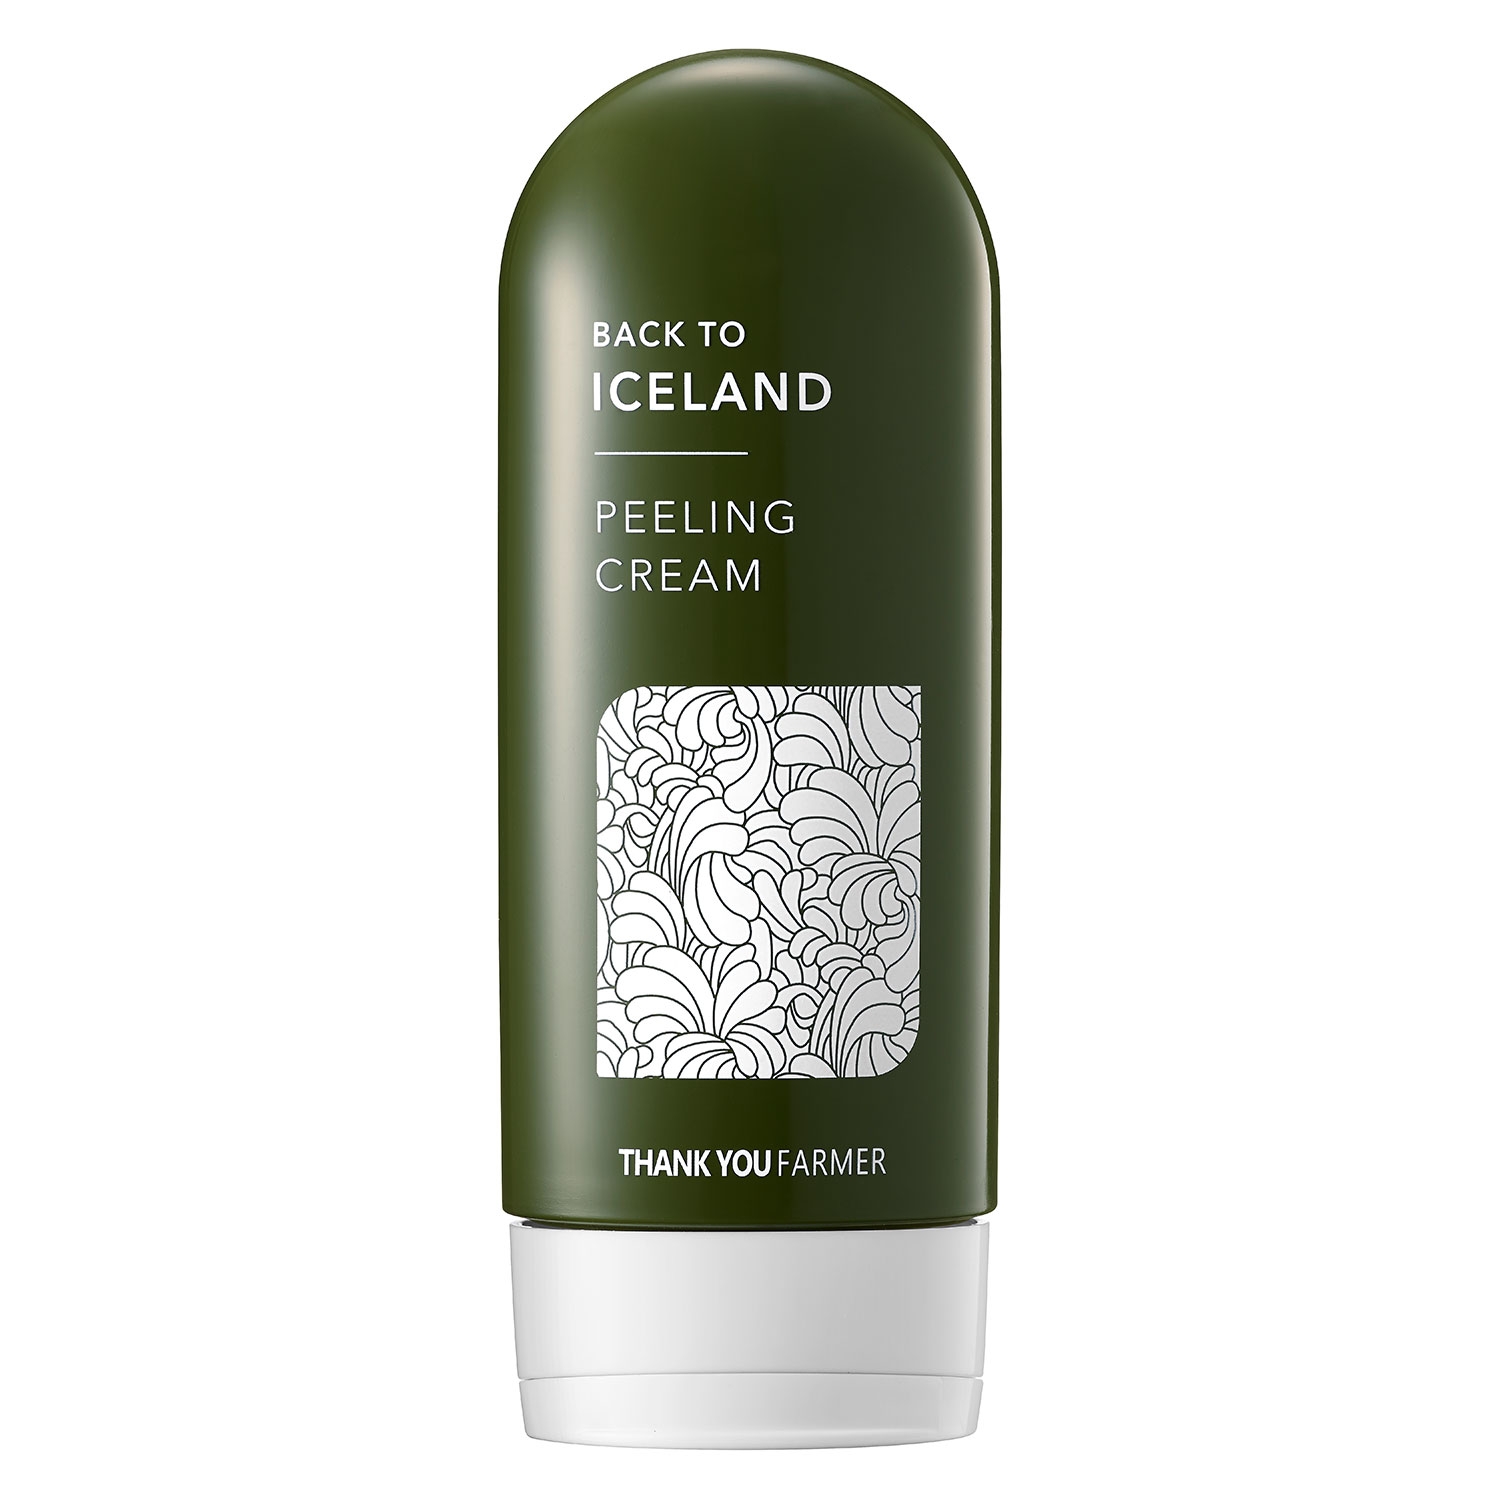 Produktbild von THANK YOU FARMER - Back To Iceland Peeling Cream